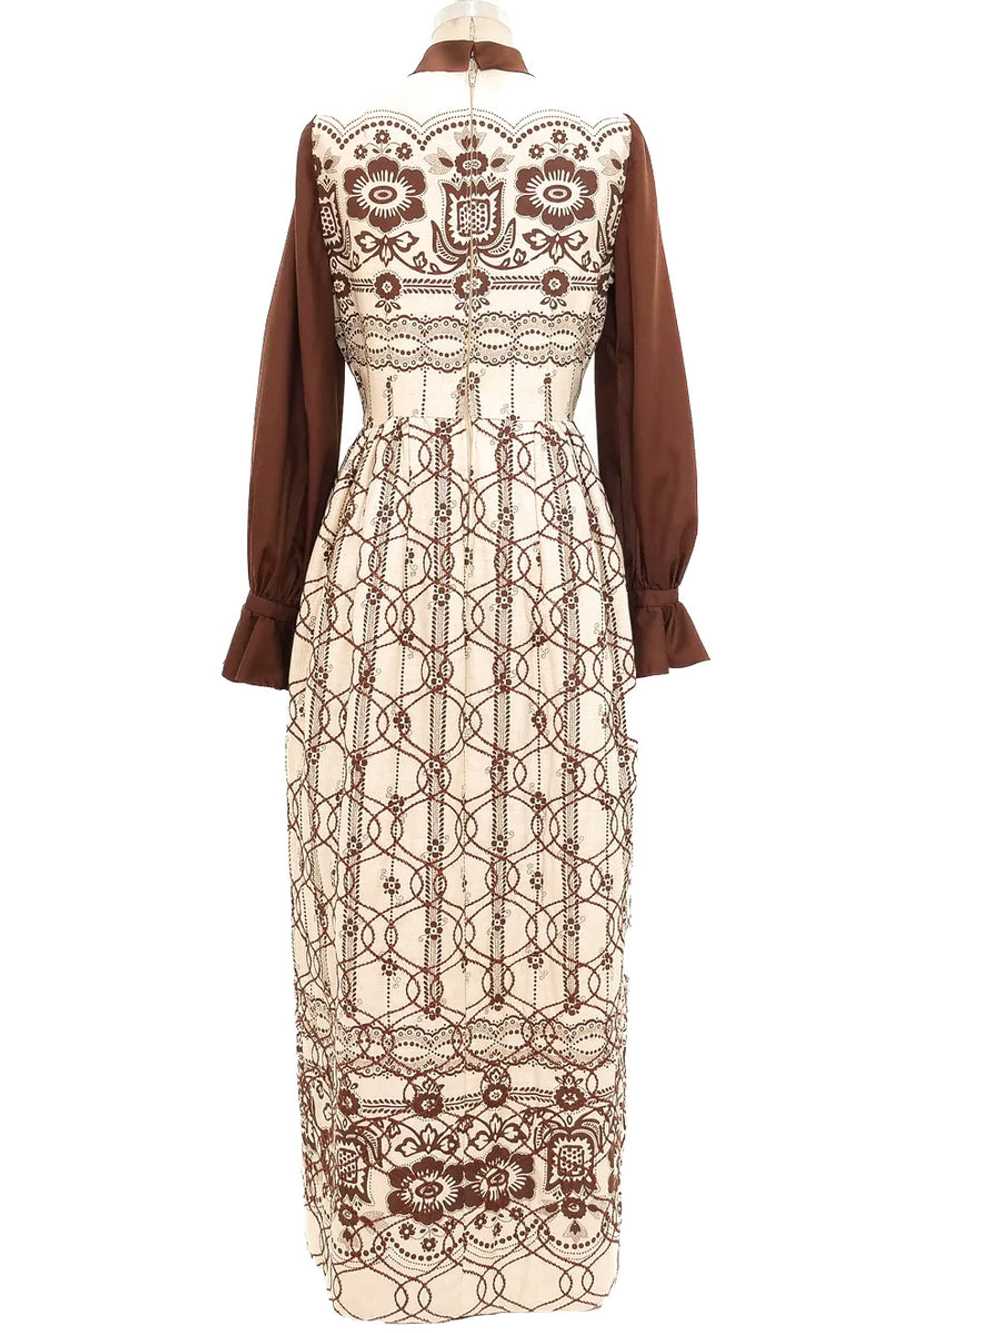 Oscar de la Renta Embroidered Peasant Dress - image 2